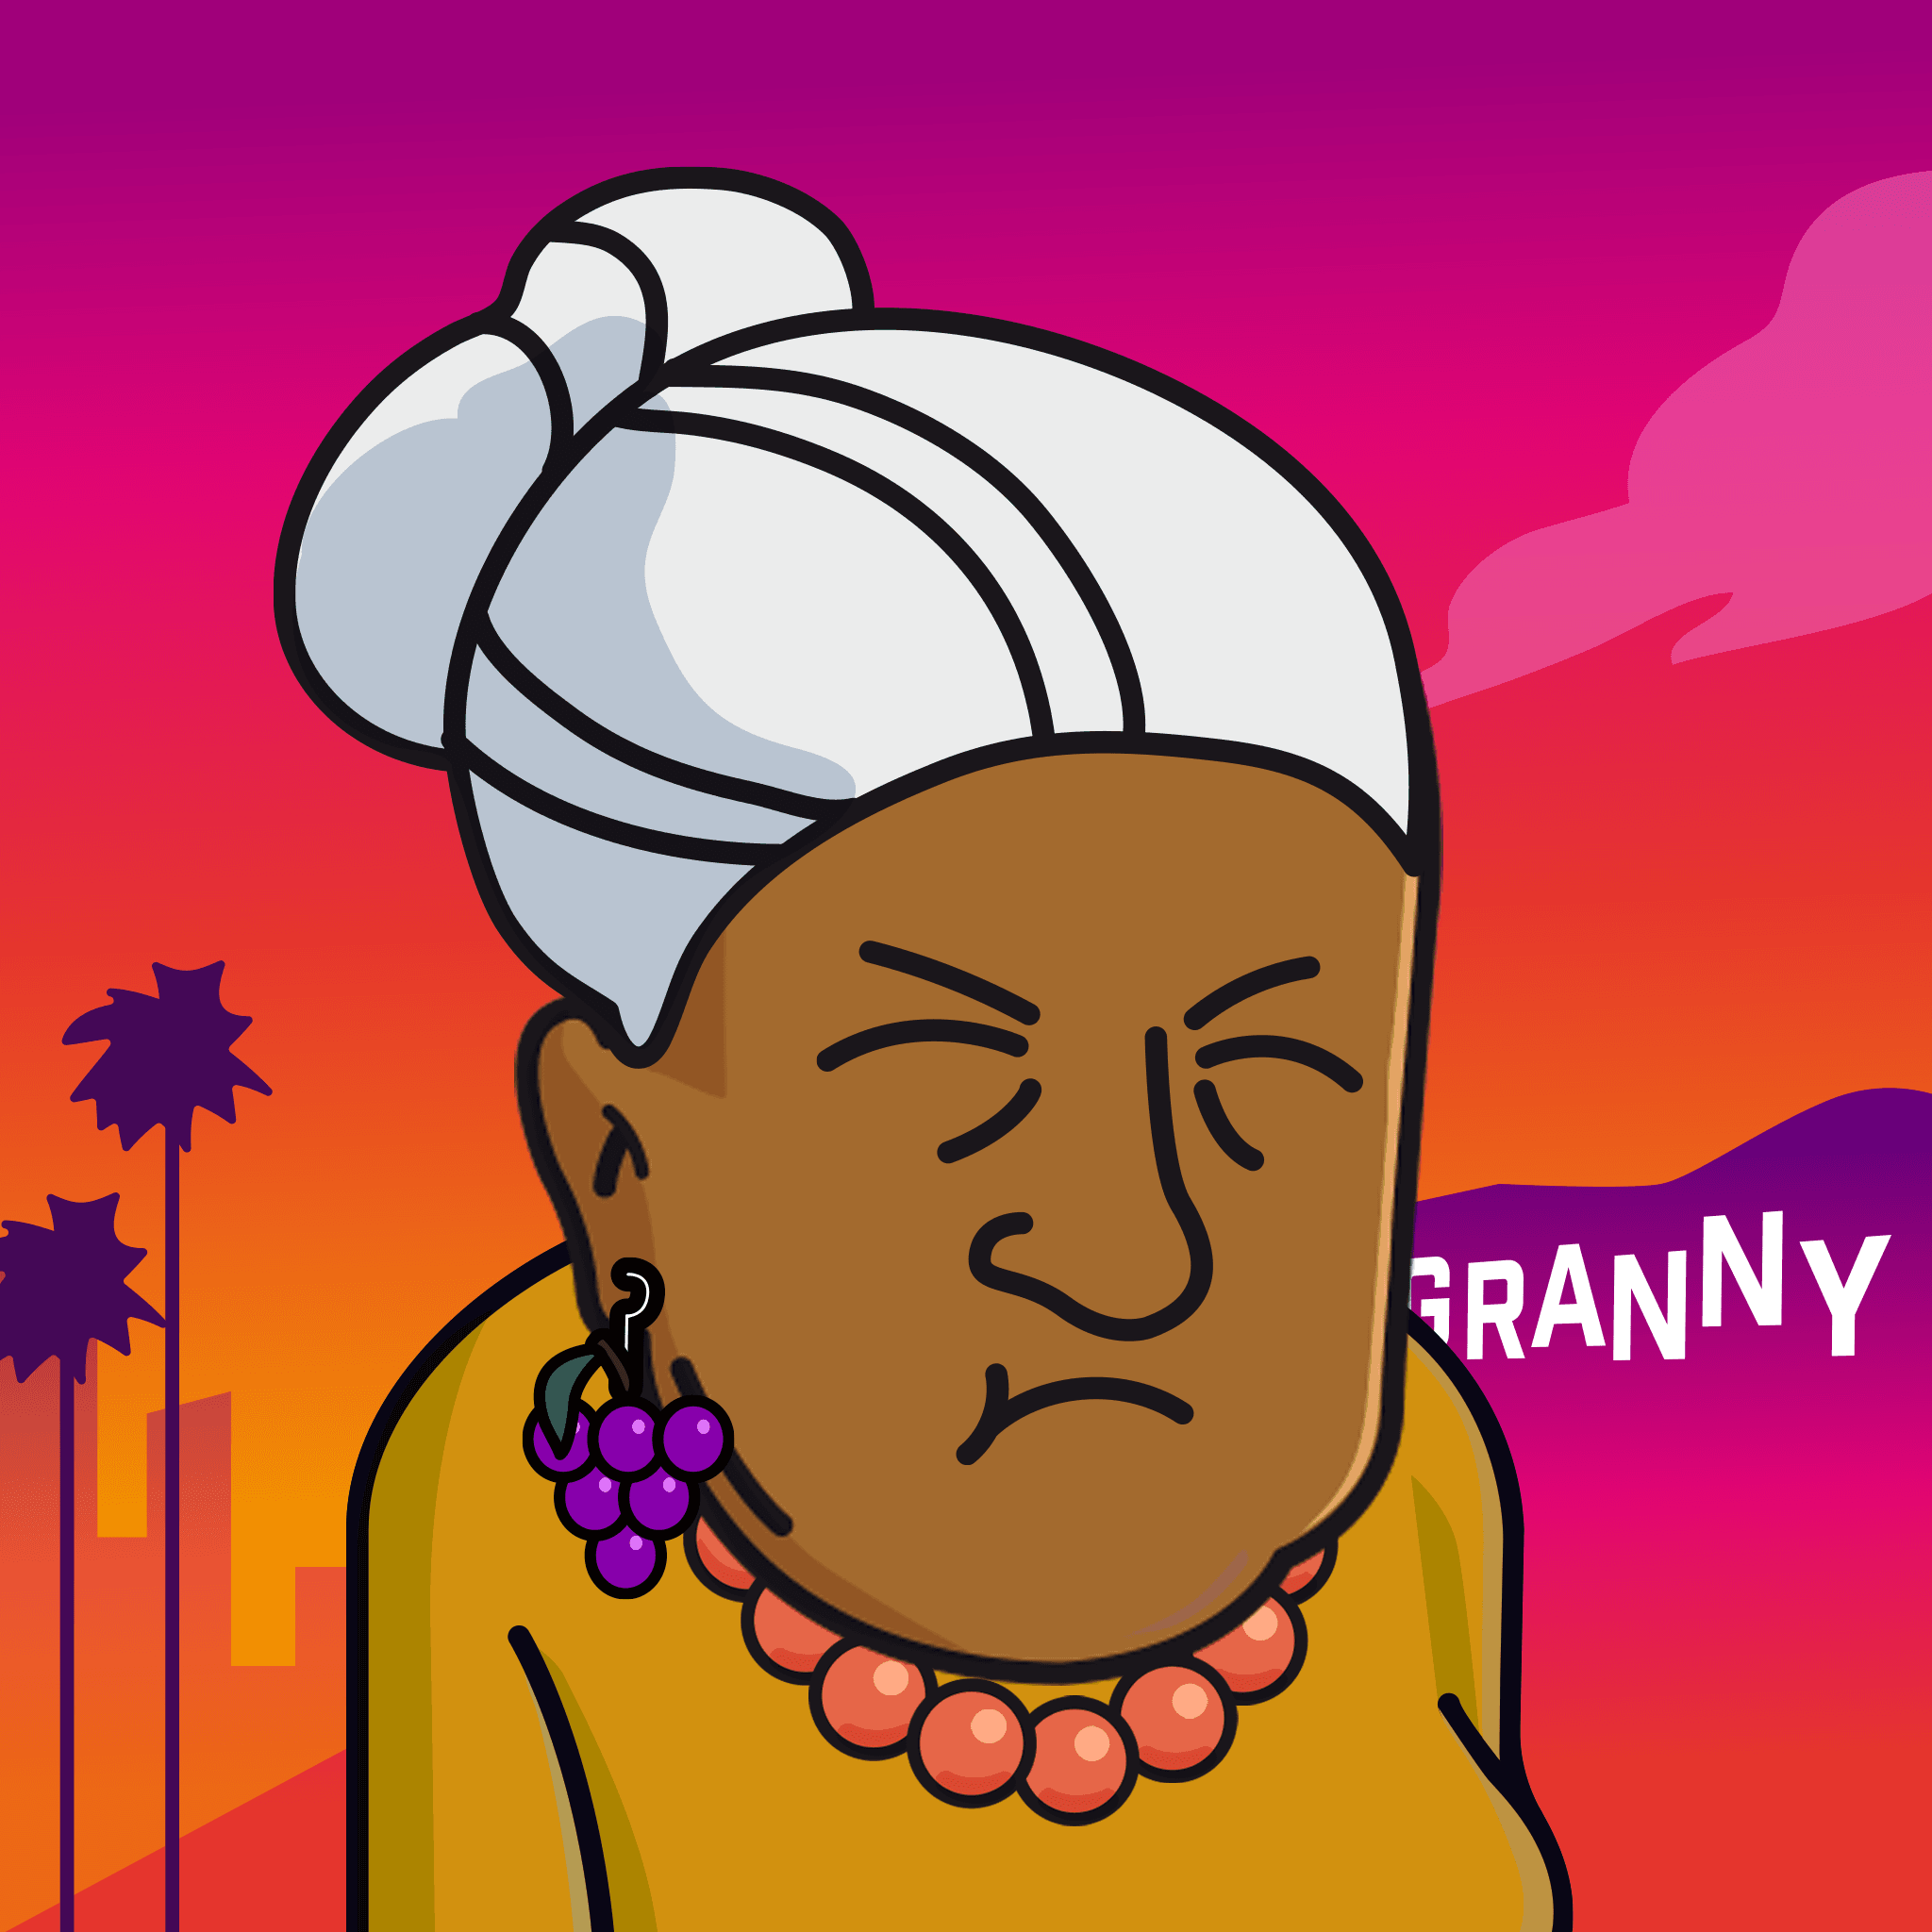 Golden Granny #9676